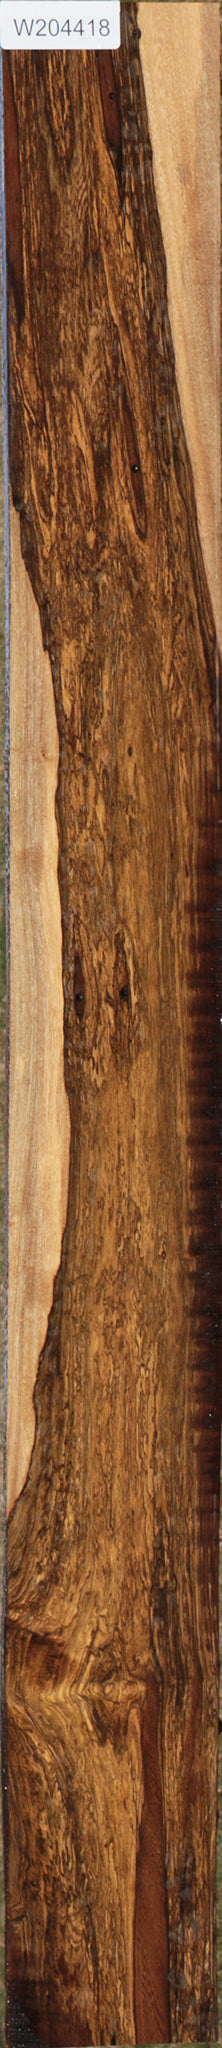 Extra Fancy Louro Preto Micro Lumber